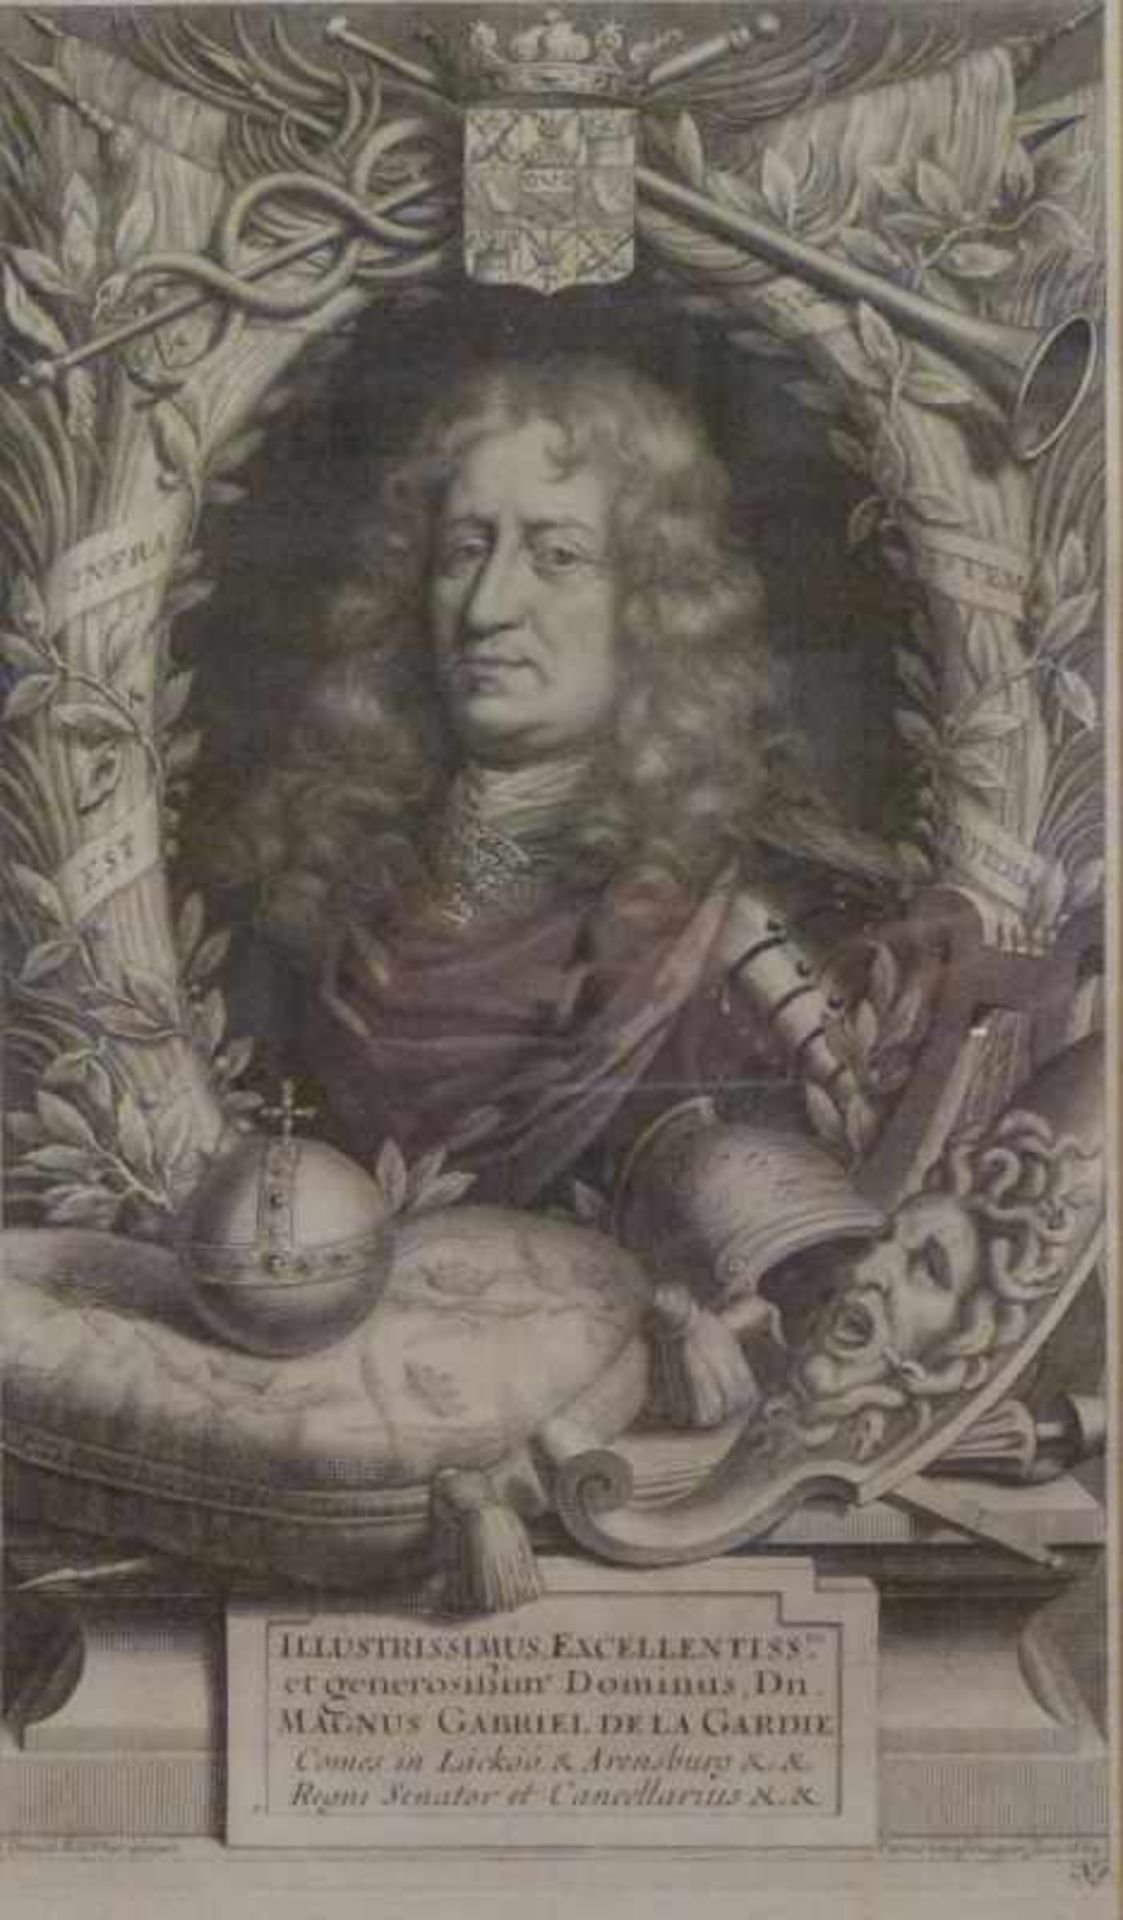 "Magnus Gabriel de la Gardie", 17.Jh. Kupferstich von Petrus van Schuppen 1669, Brustbildin